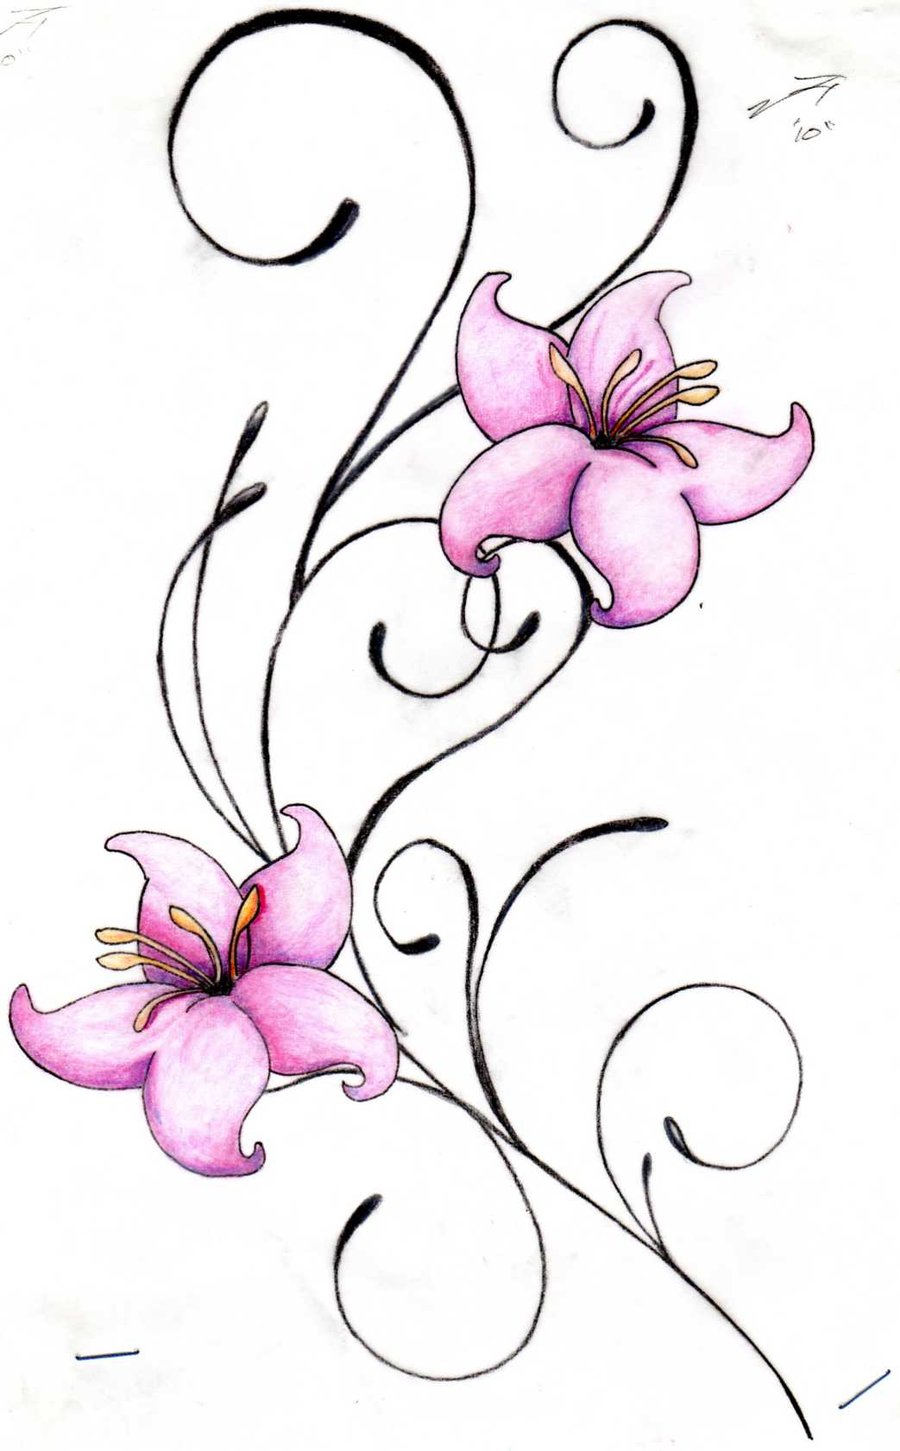 Birth Flower Tattoo Design on LinkedIn: November Birth Flower Tattoo